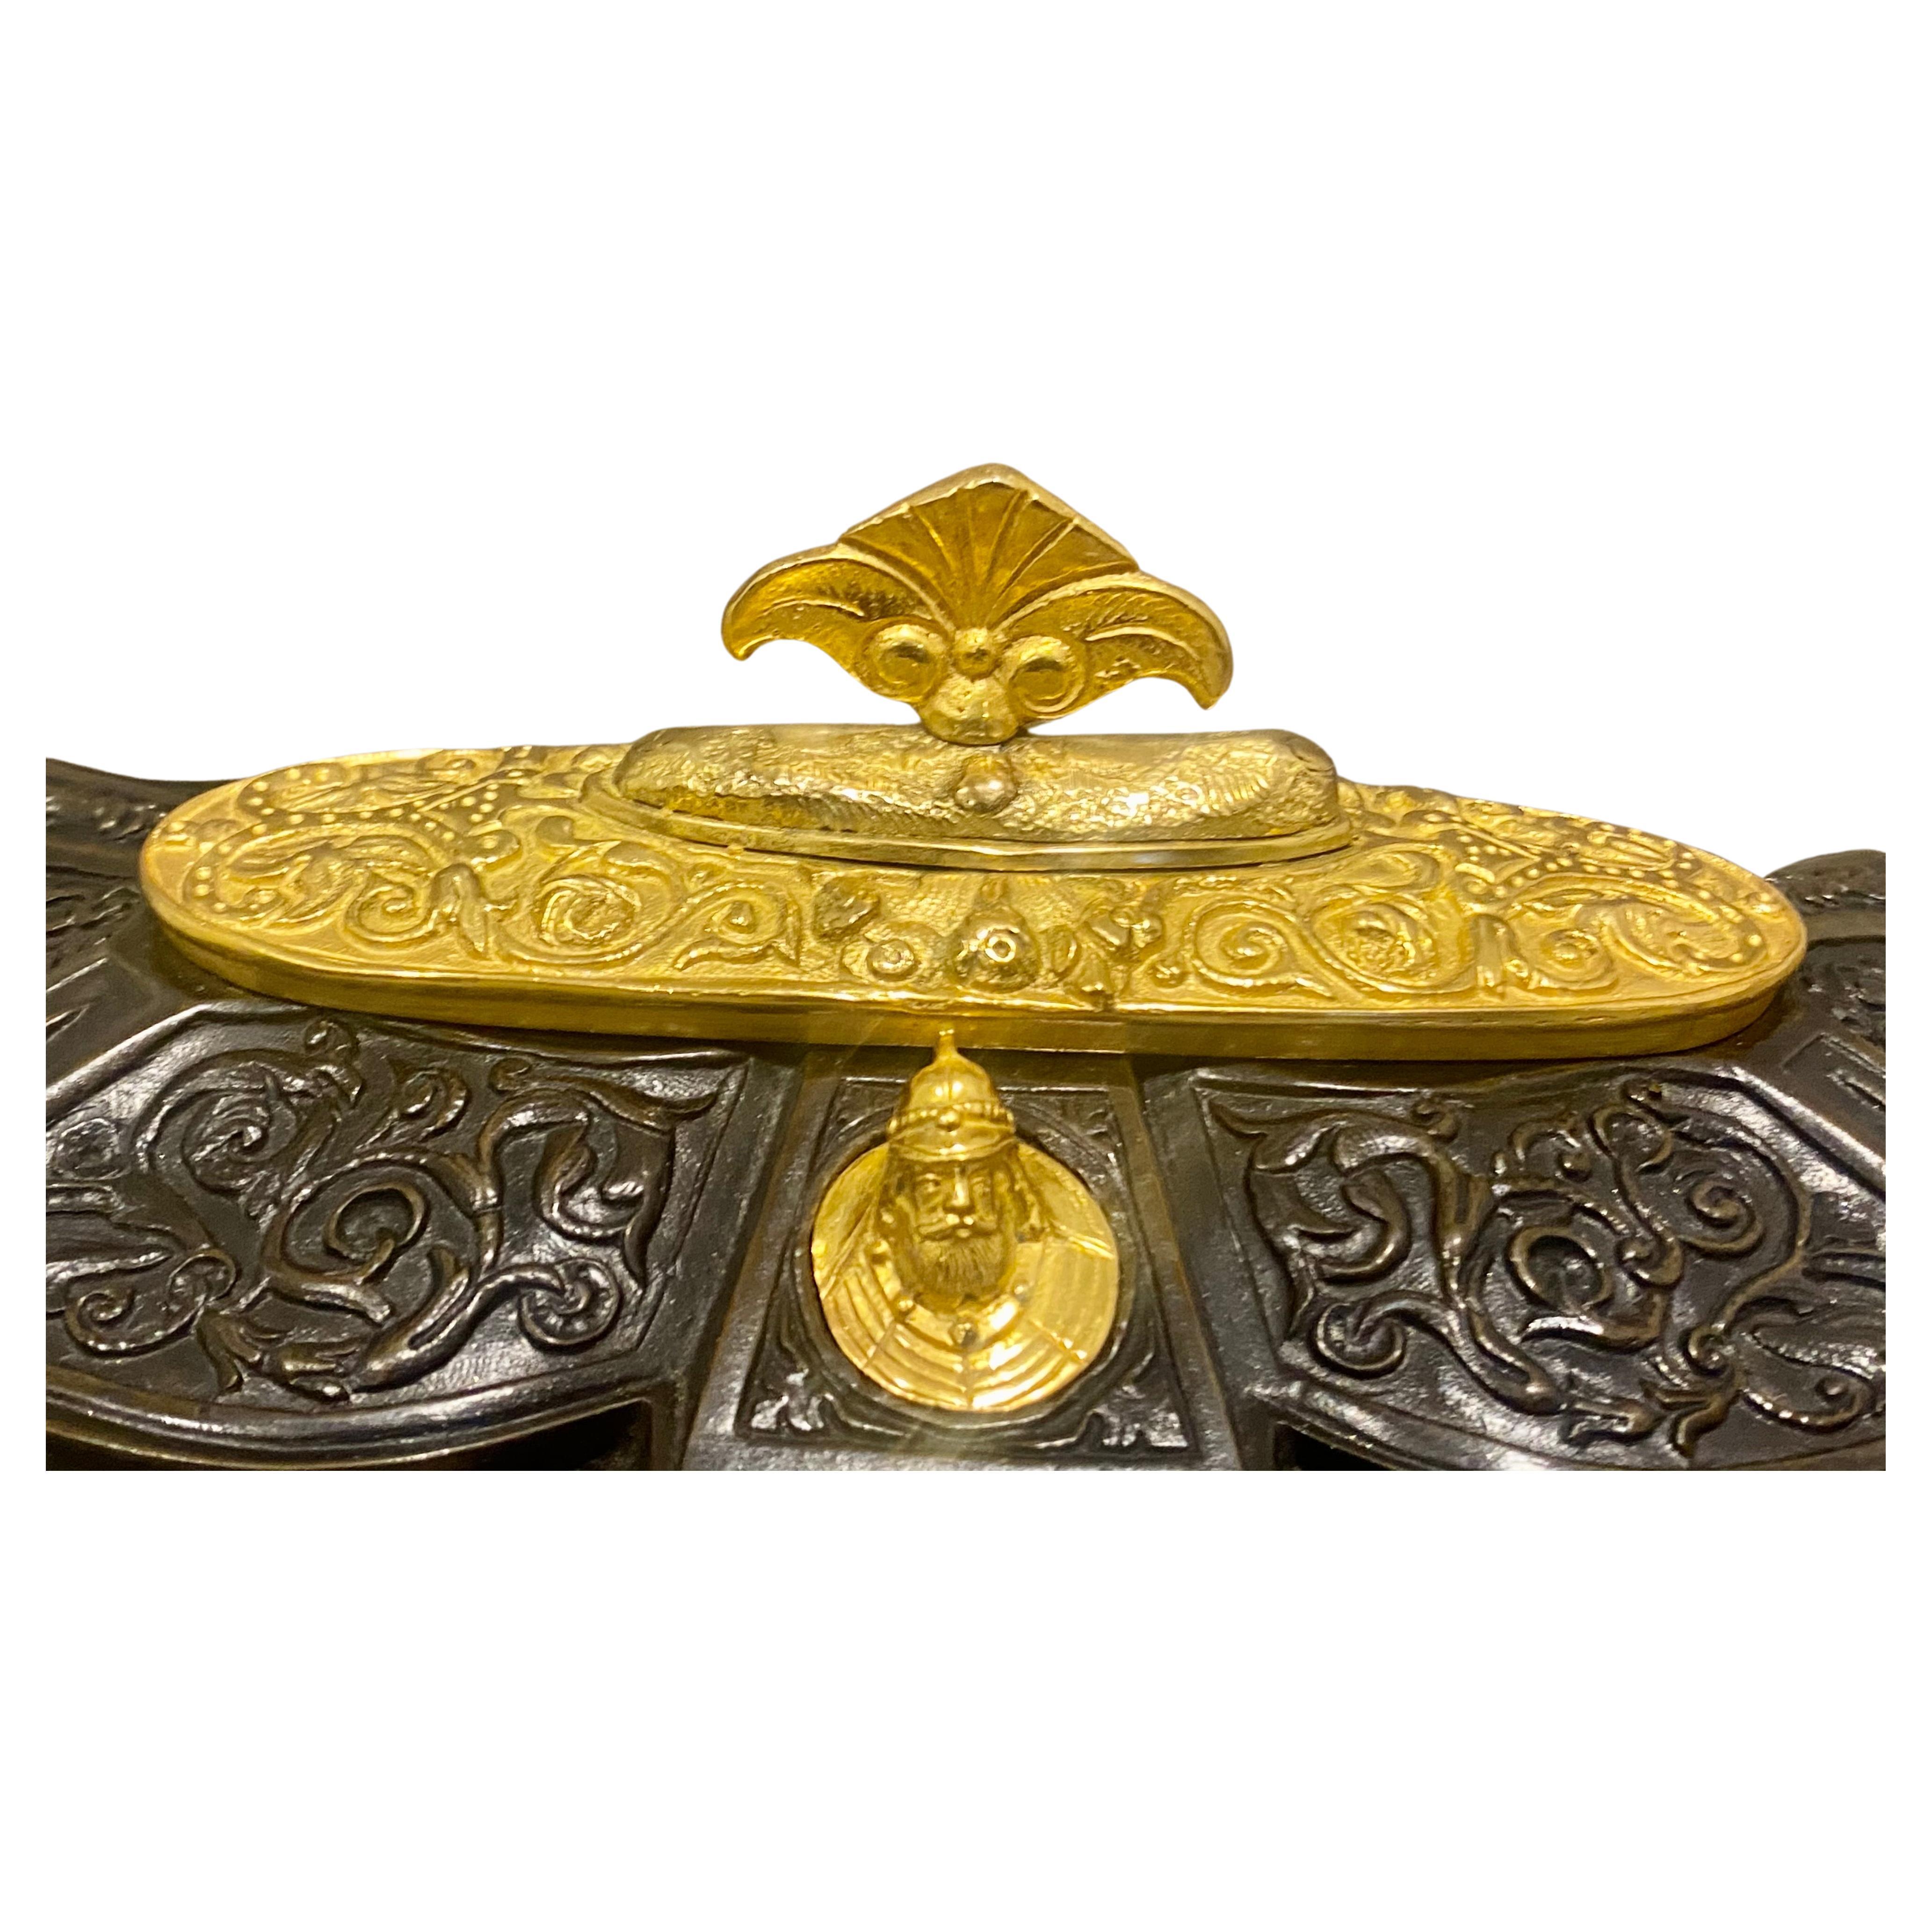 A Large Impressive 19th Century Bronze Jewelry Casket Box. Circa 1860 For Sale 4